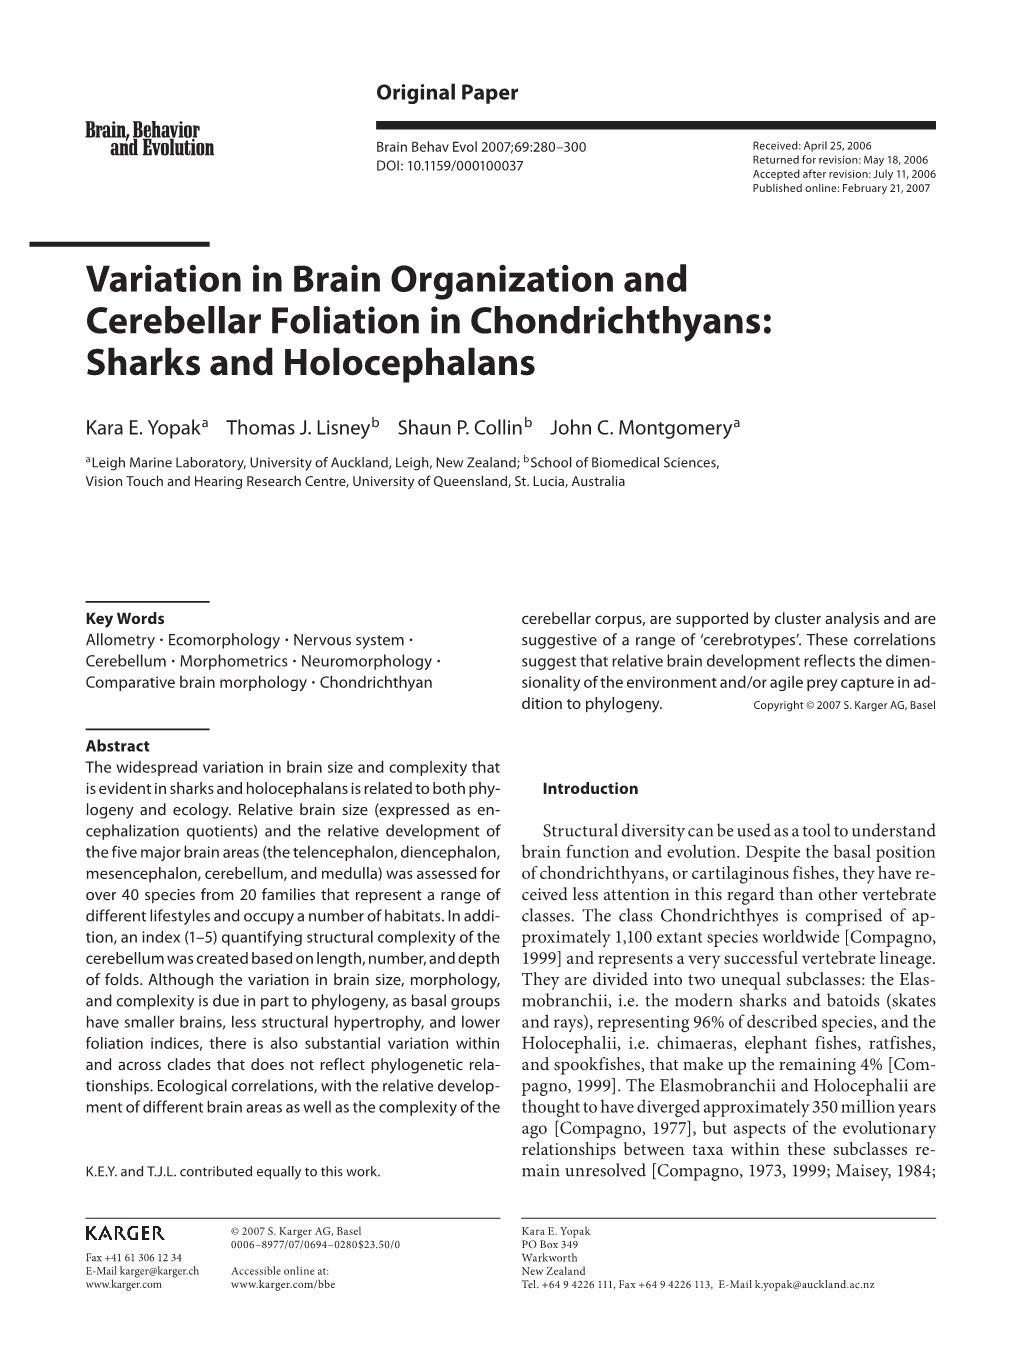 Variation in Brain Organization and Cerebellar Foliation in Chondrichthyans: Sharks and Holocephalans